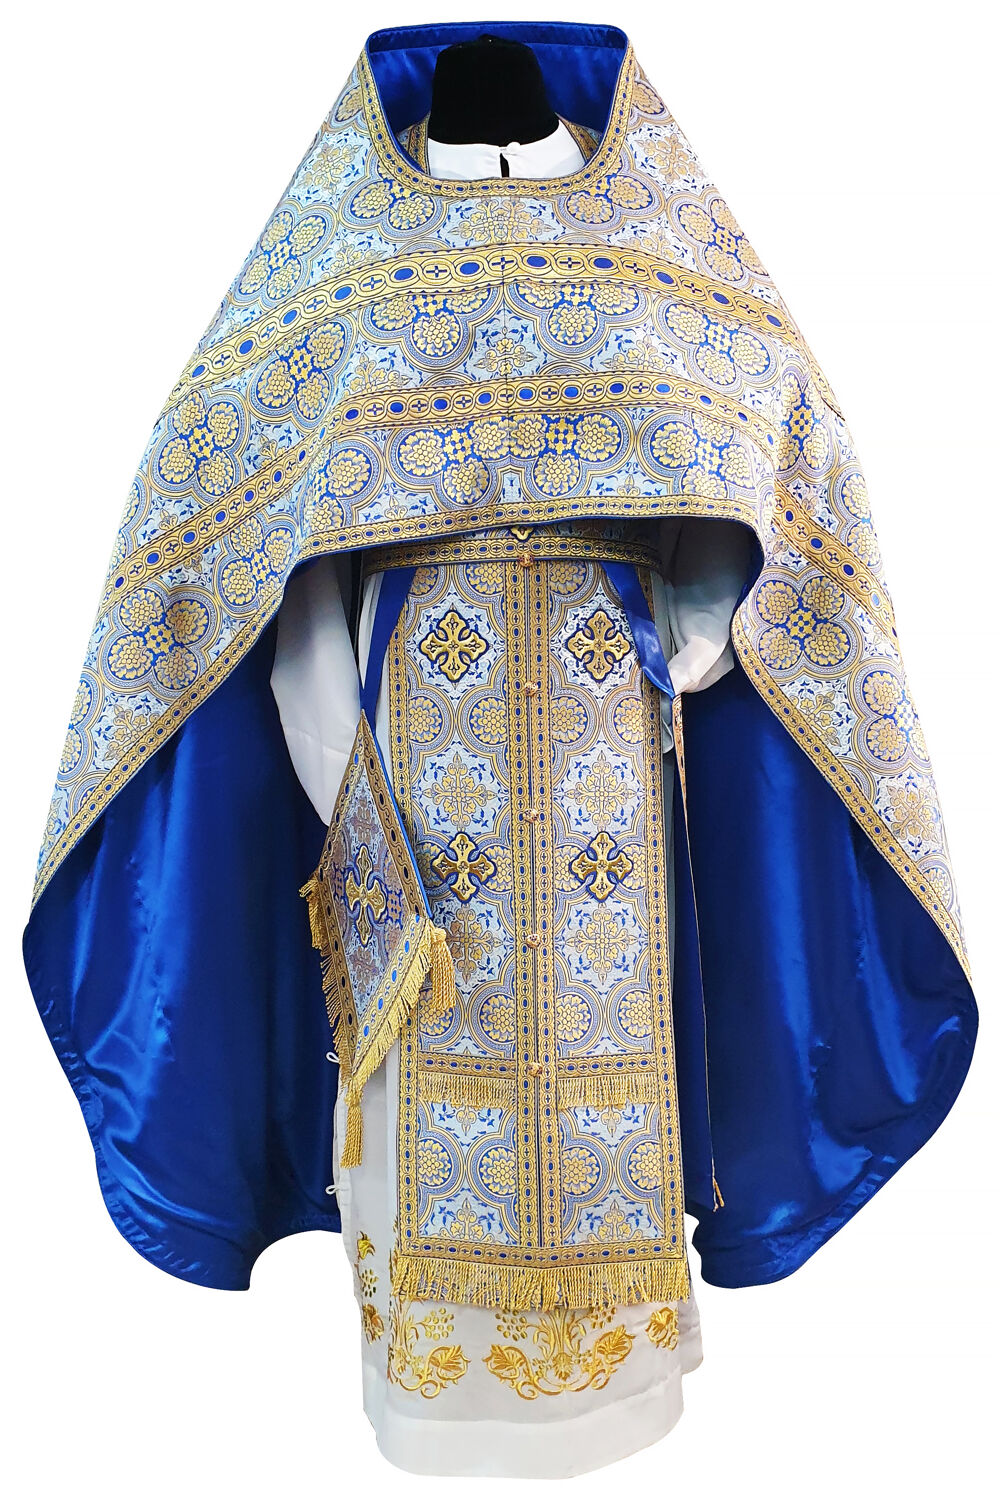 Priest's Vestment blue